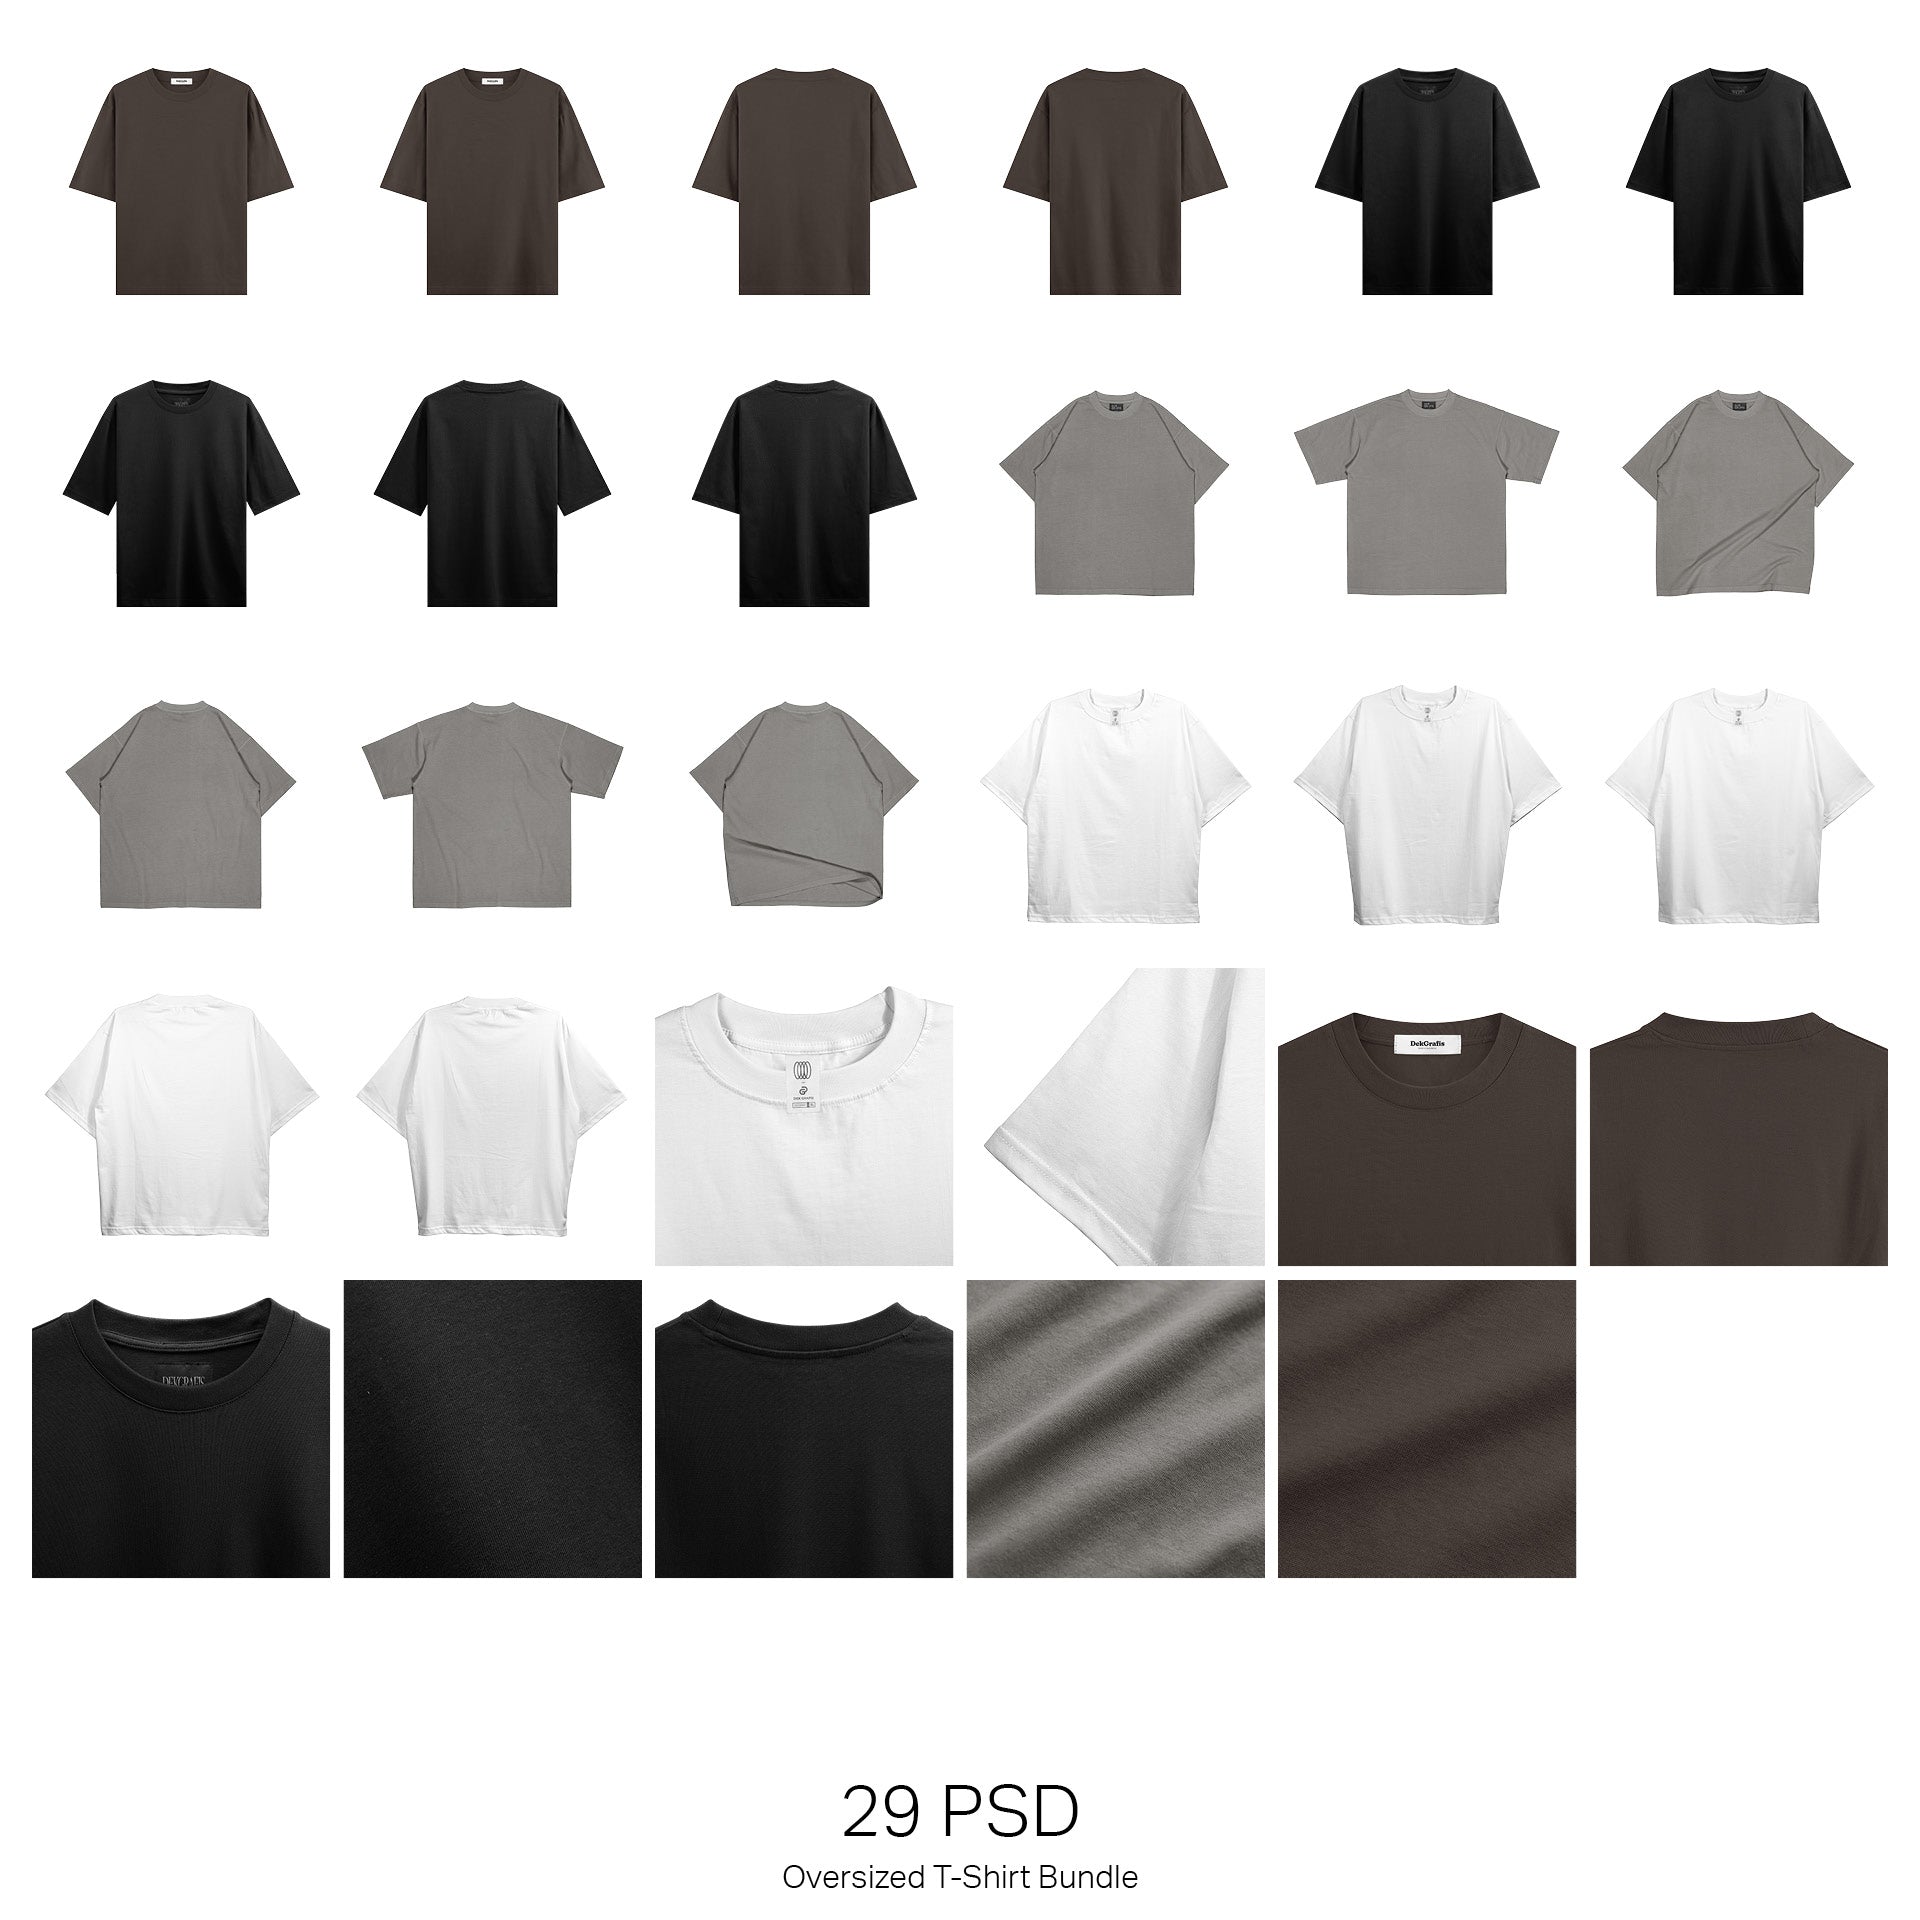 29 PSD Oversized T-Shirt Bundle